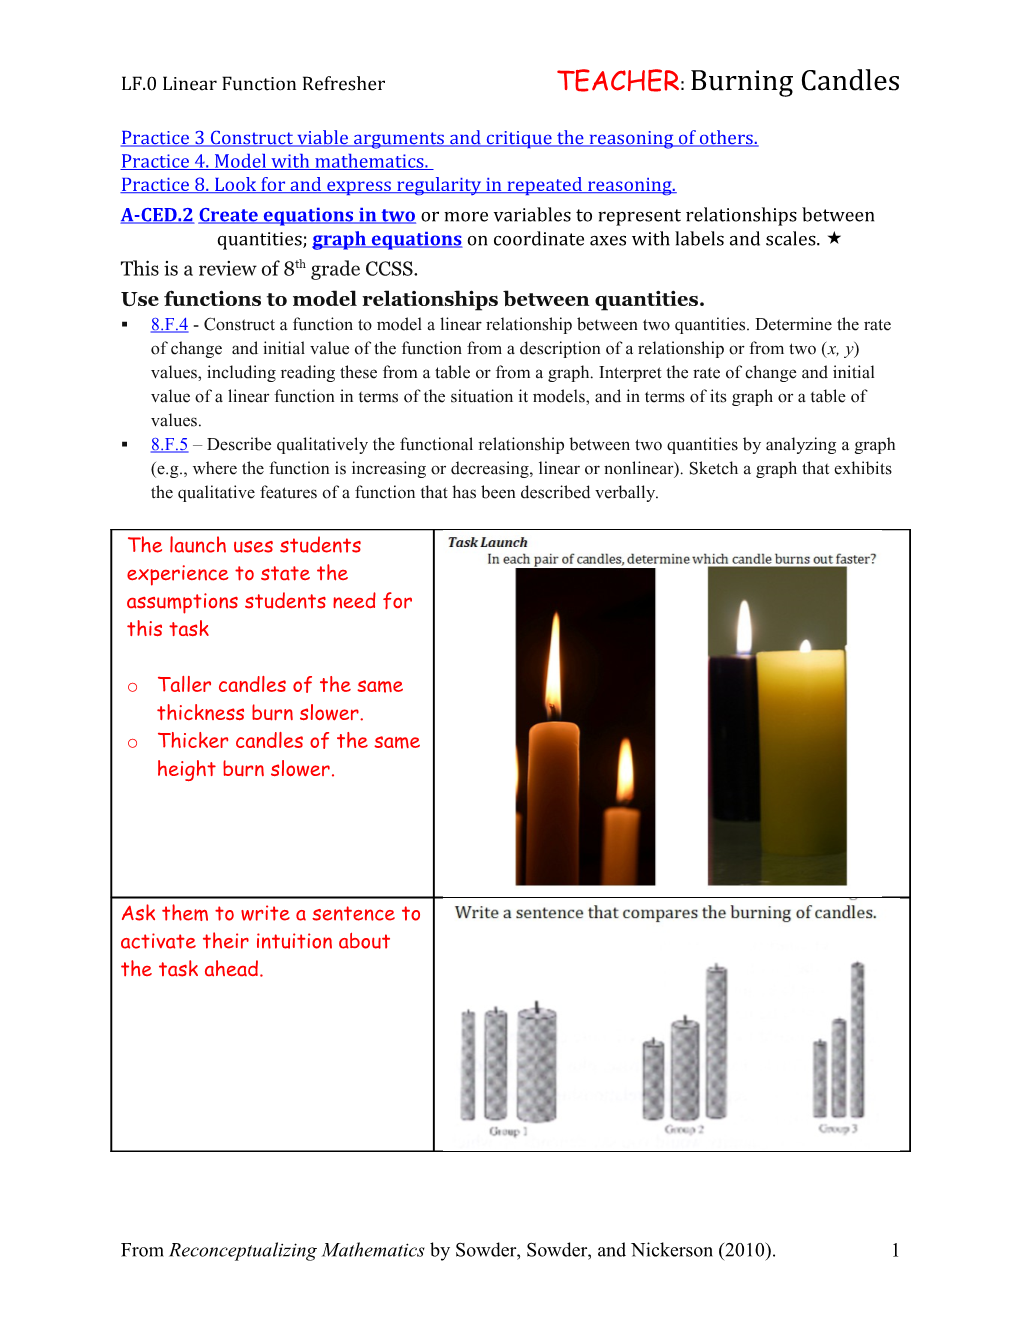 LF.0 Linear Function Refresherteacher: Burning Candles